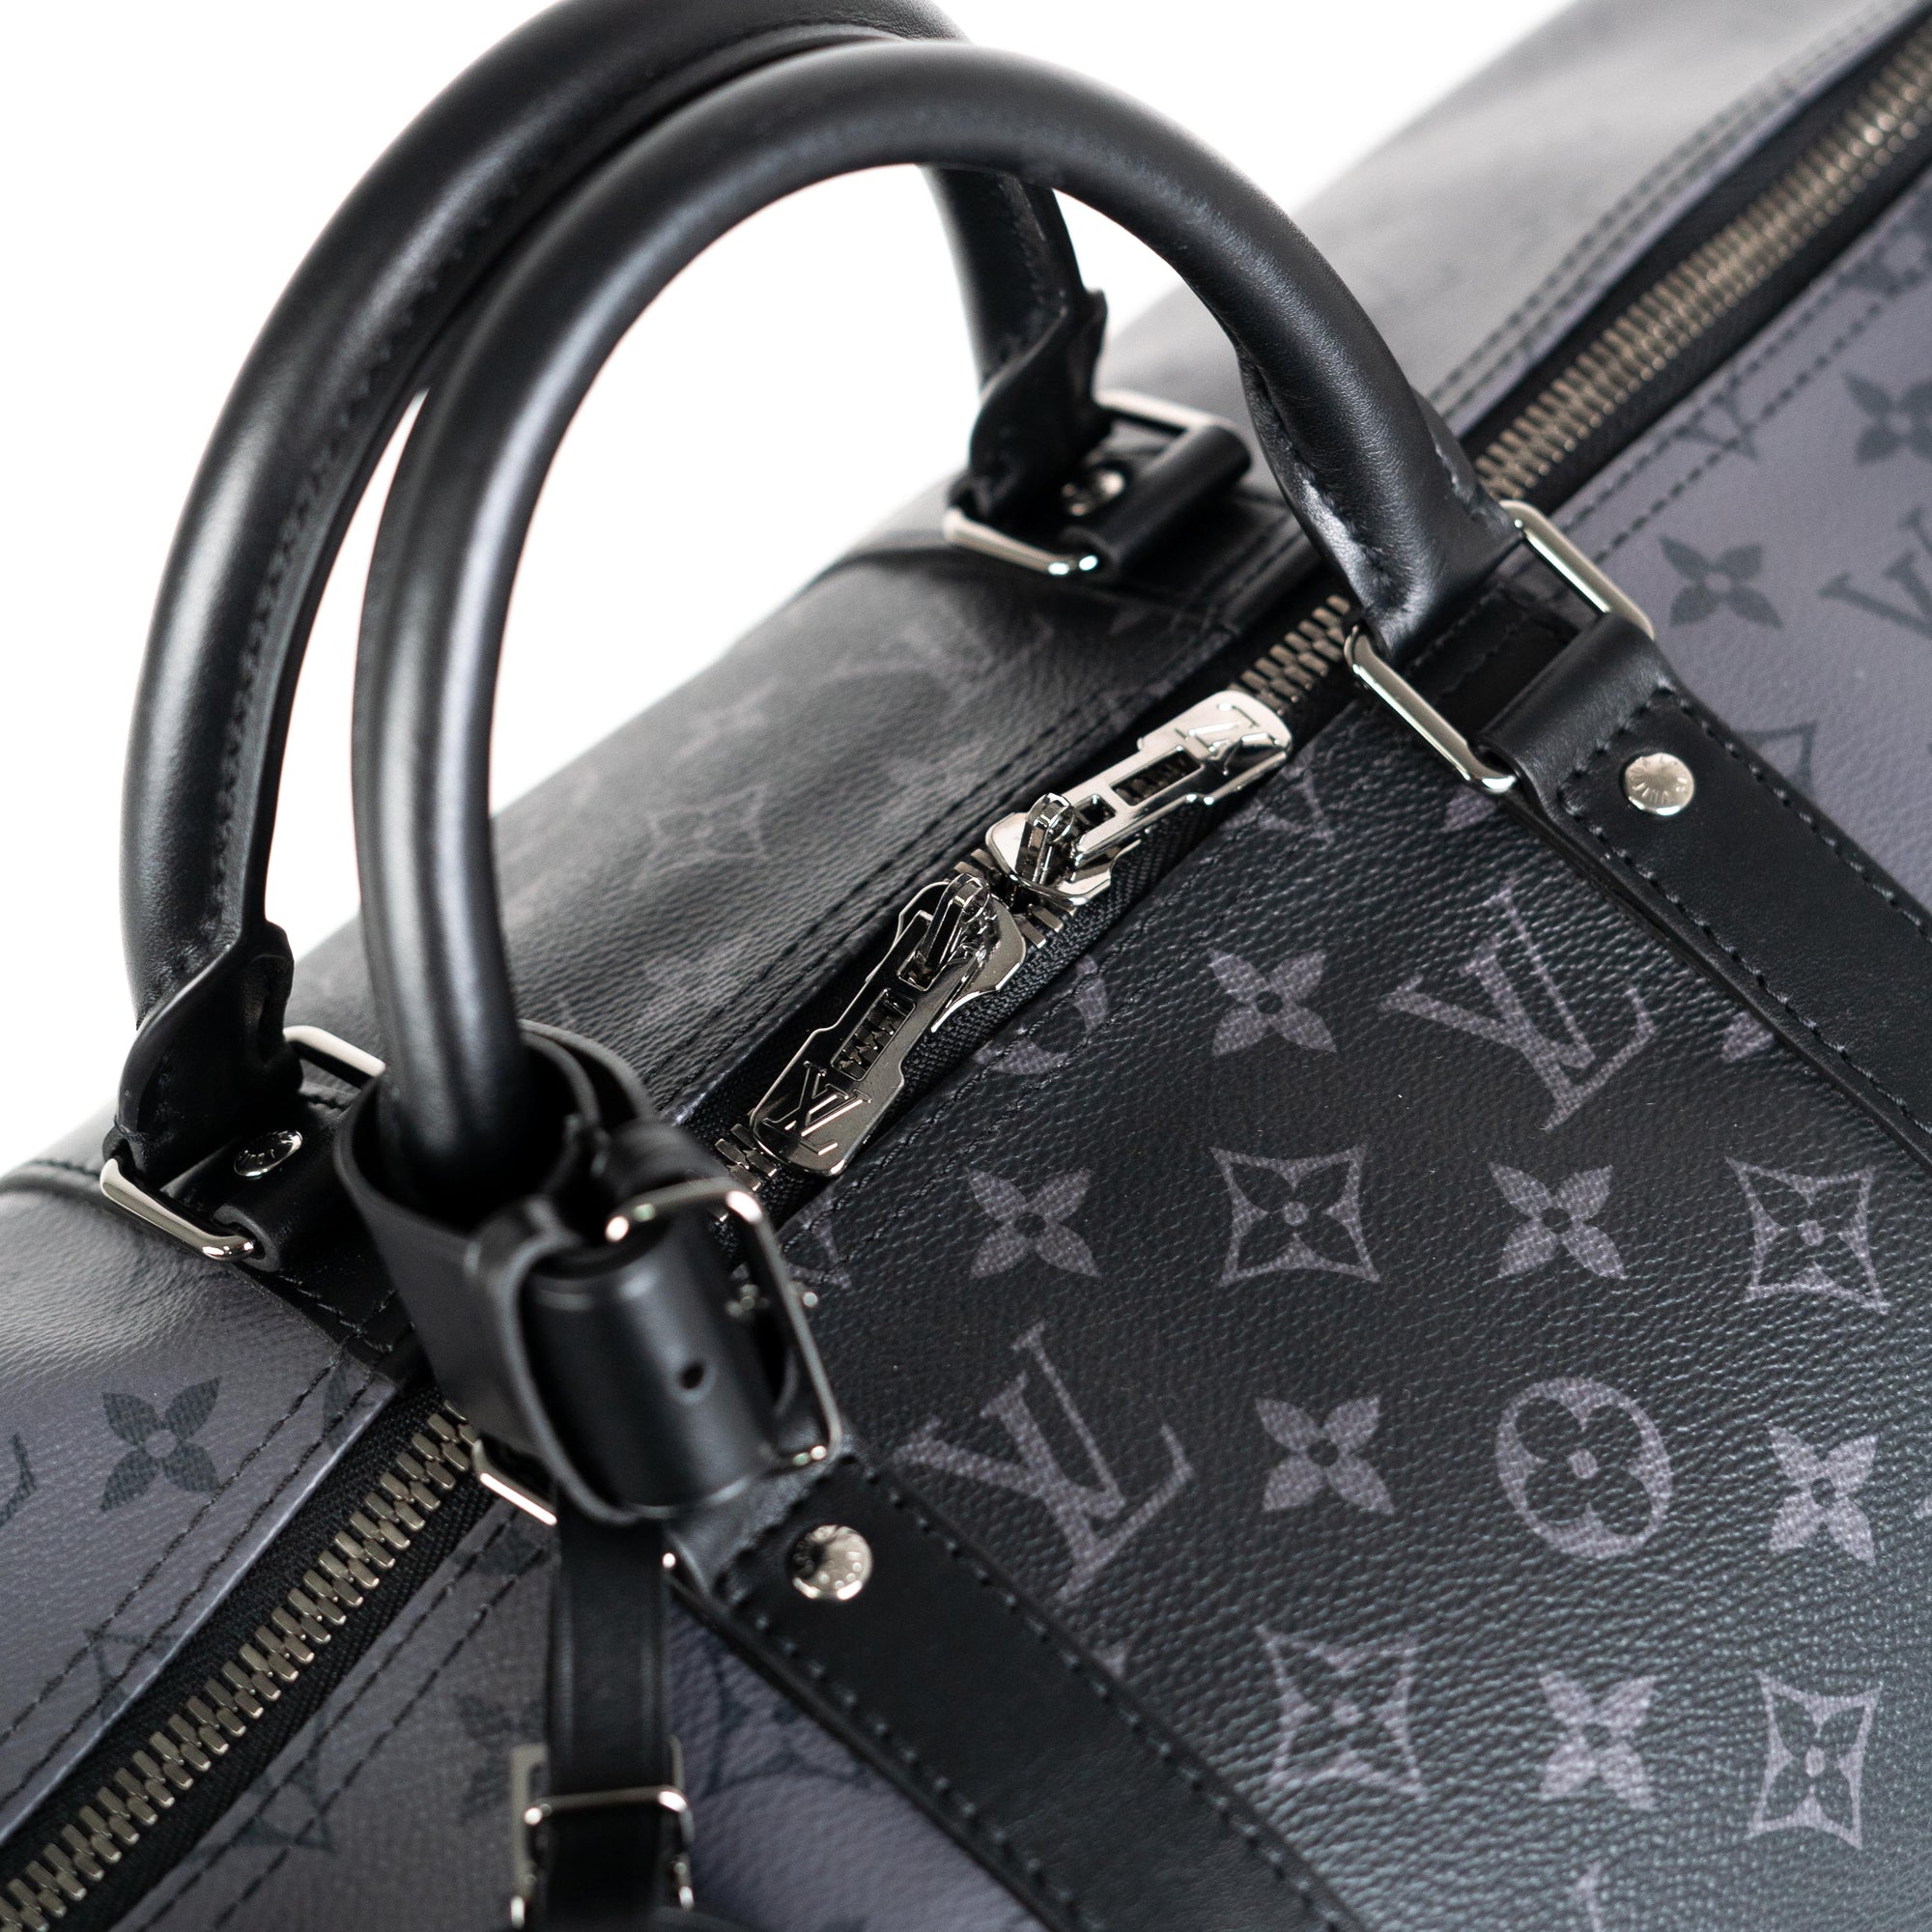 Louis Vuitton Keepall Bandouliere Monogram Eclipse Outdoor Split 50  Black/Silver